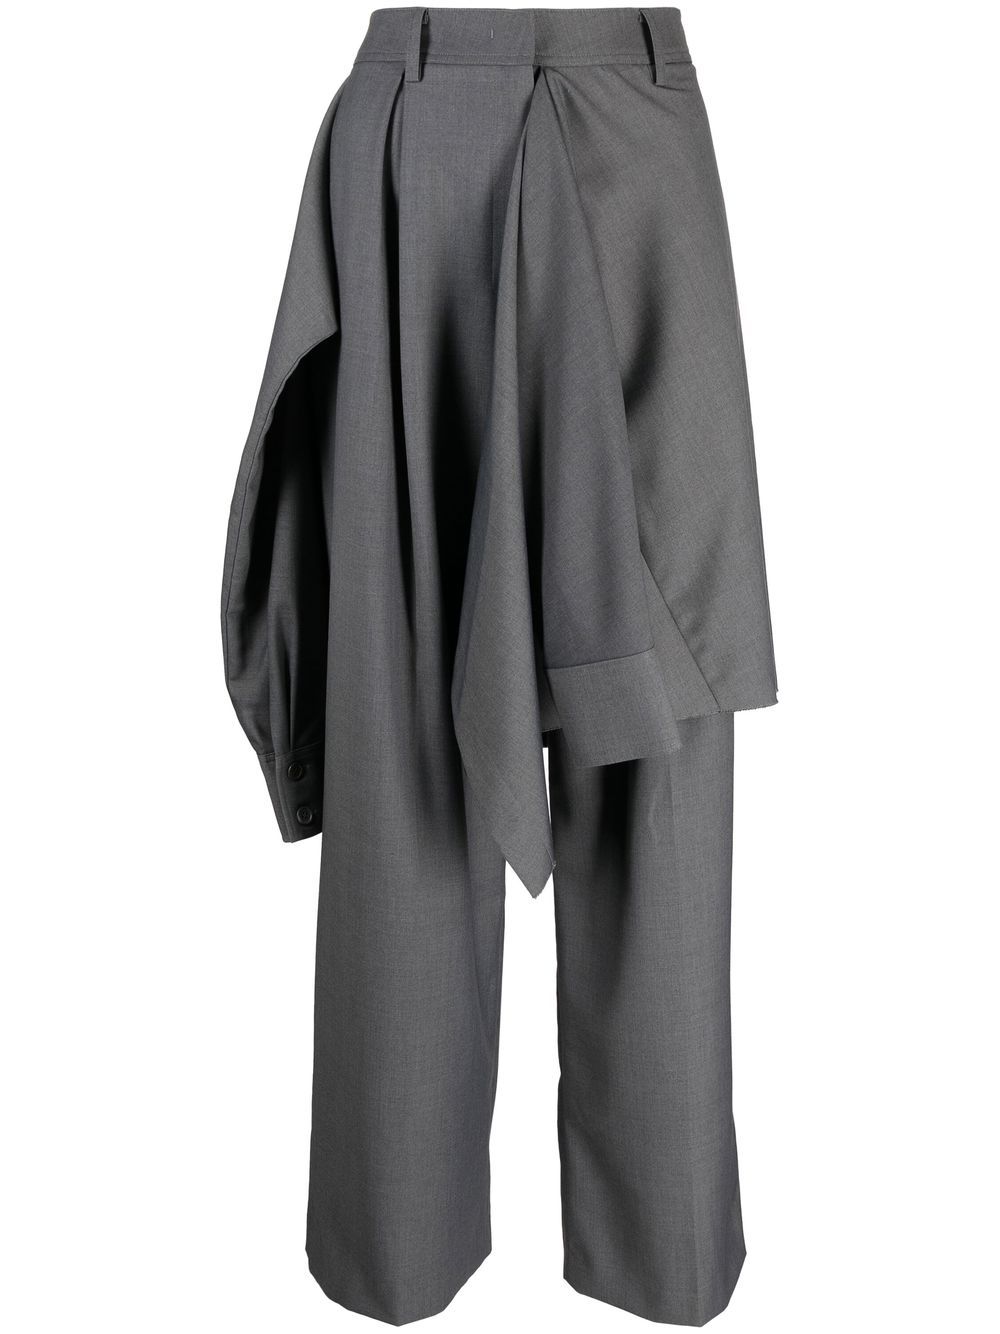 Image 1 of Goen.J layered shirt straight-leg trousers